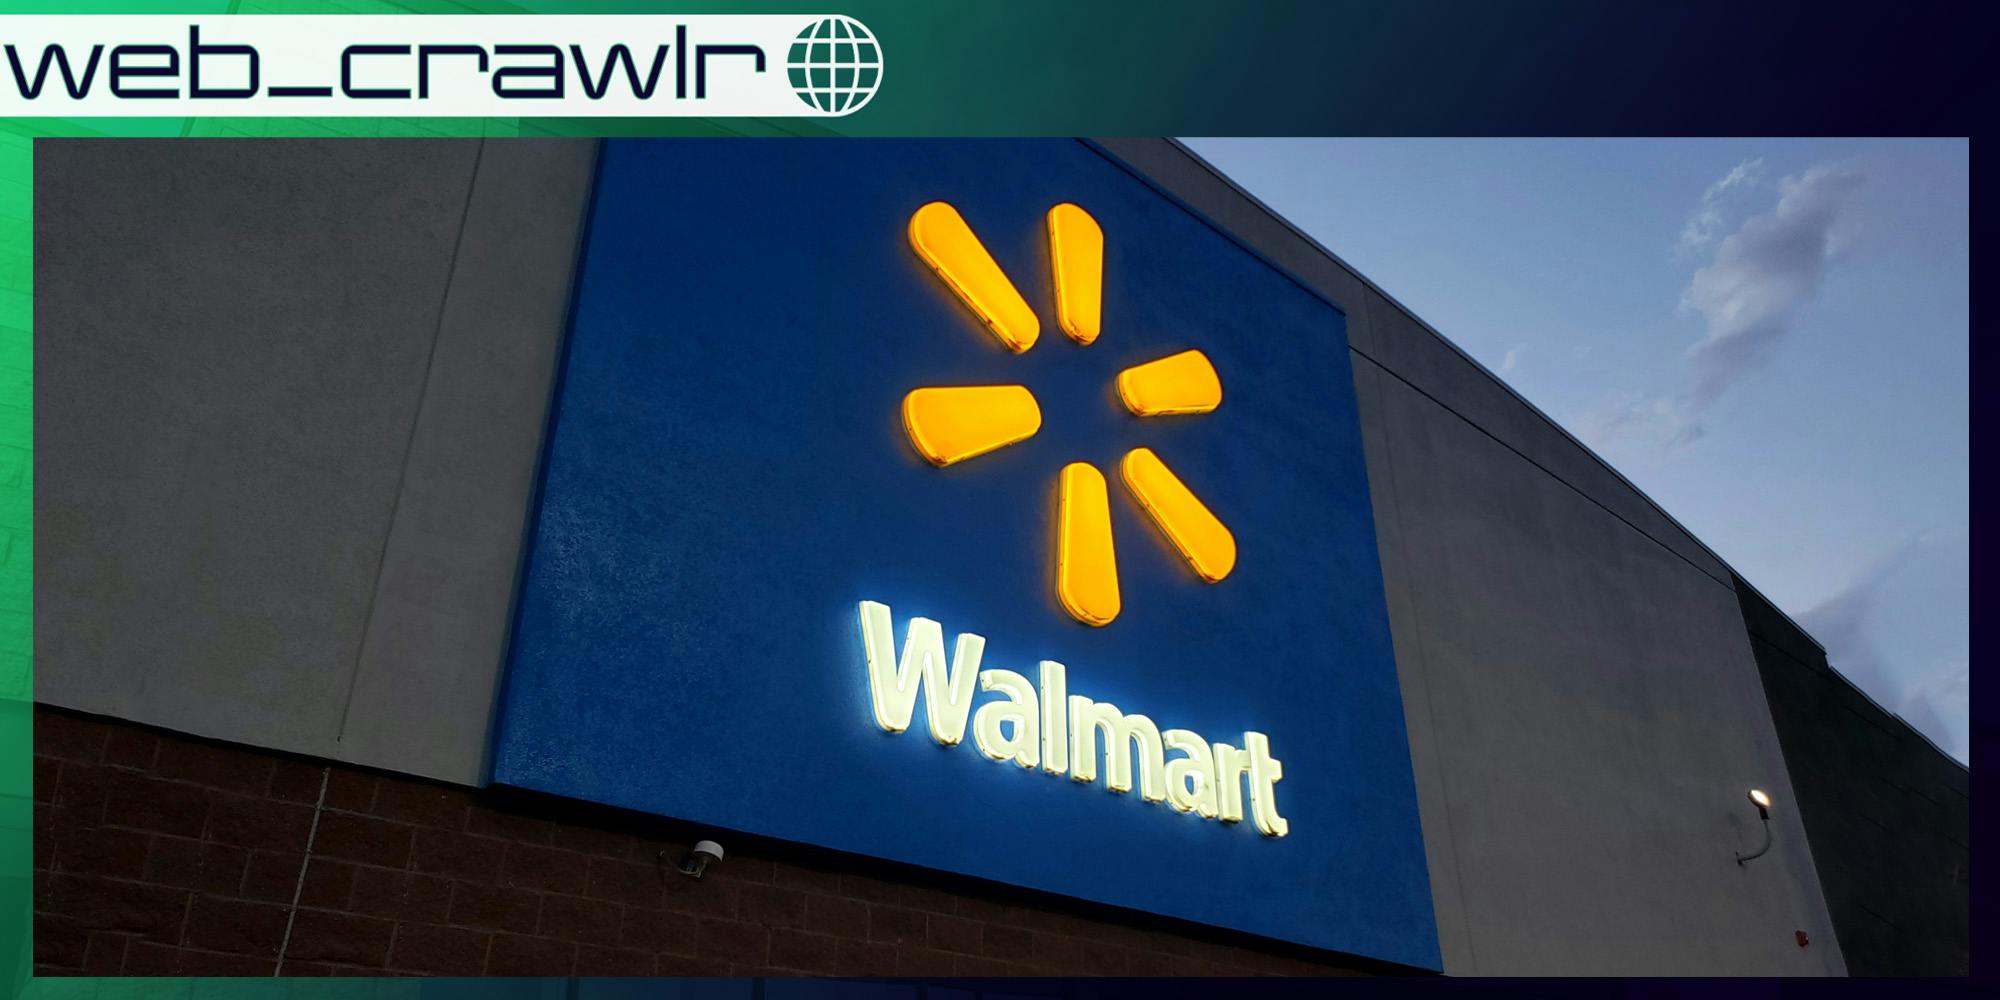 Walmart sign at night with web_crawlr logo